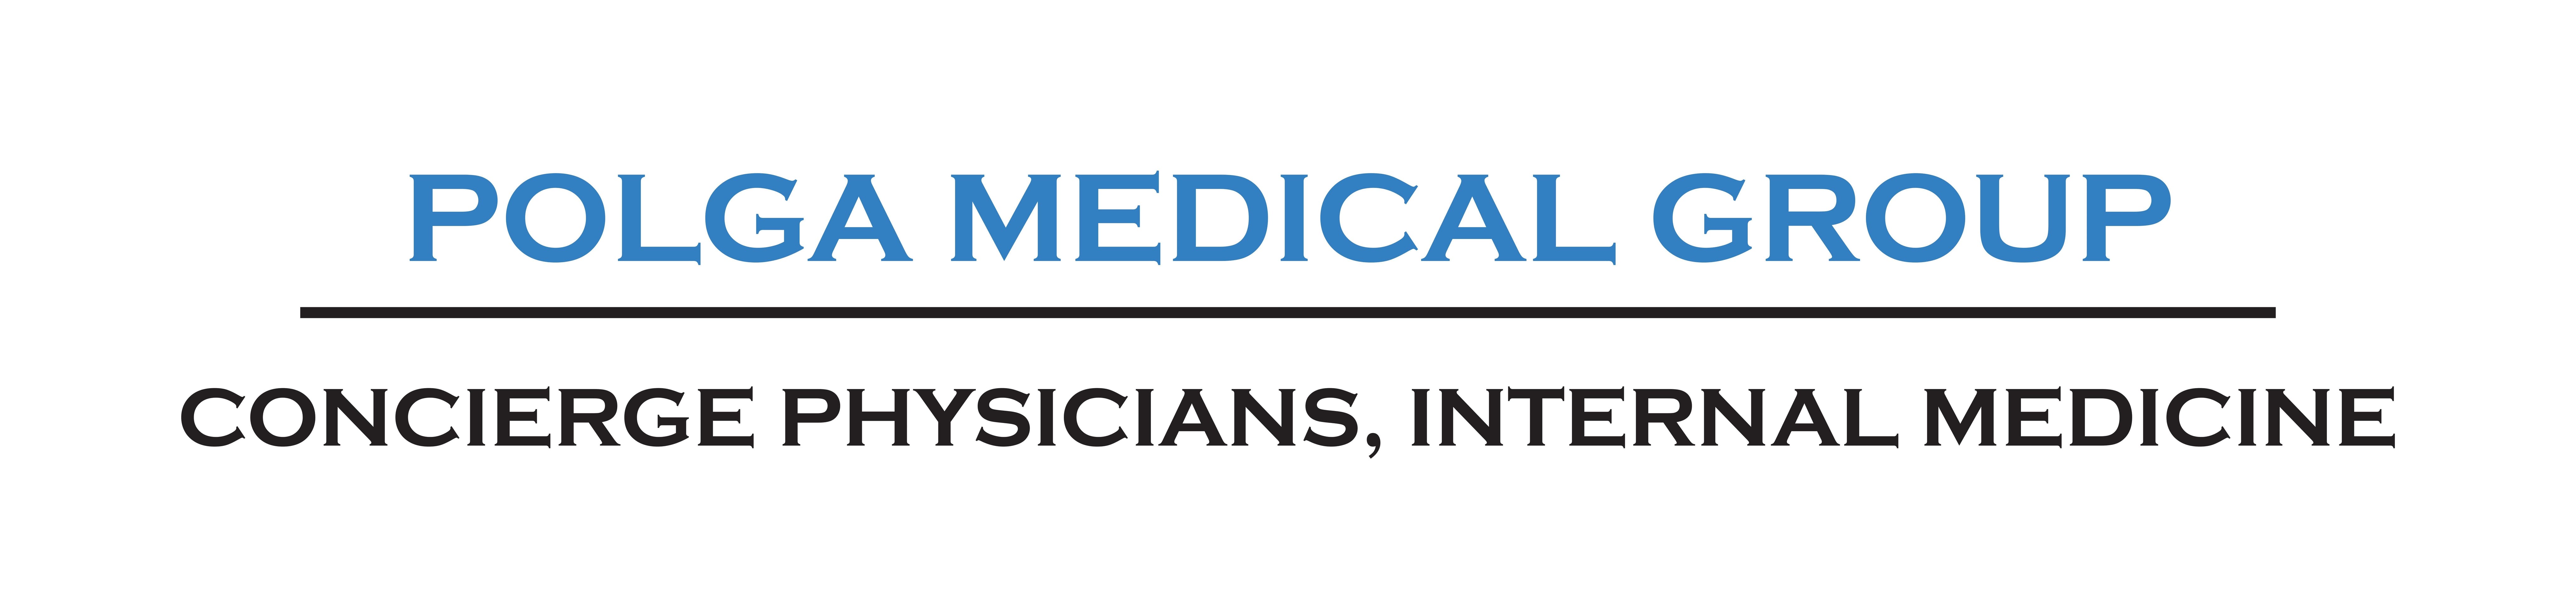 Polga Medical Group, P.A. - Medical Marijuana Doctors - Cannabizme.com